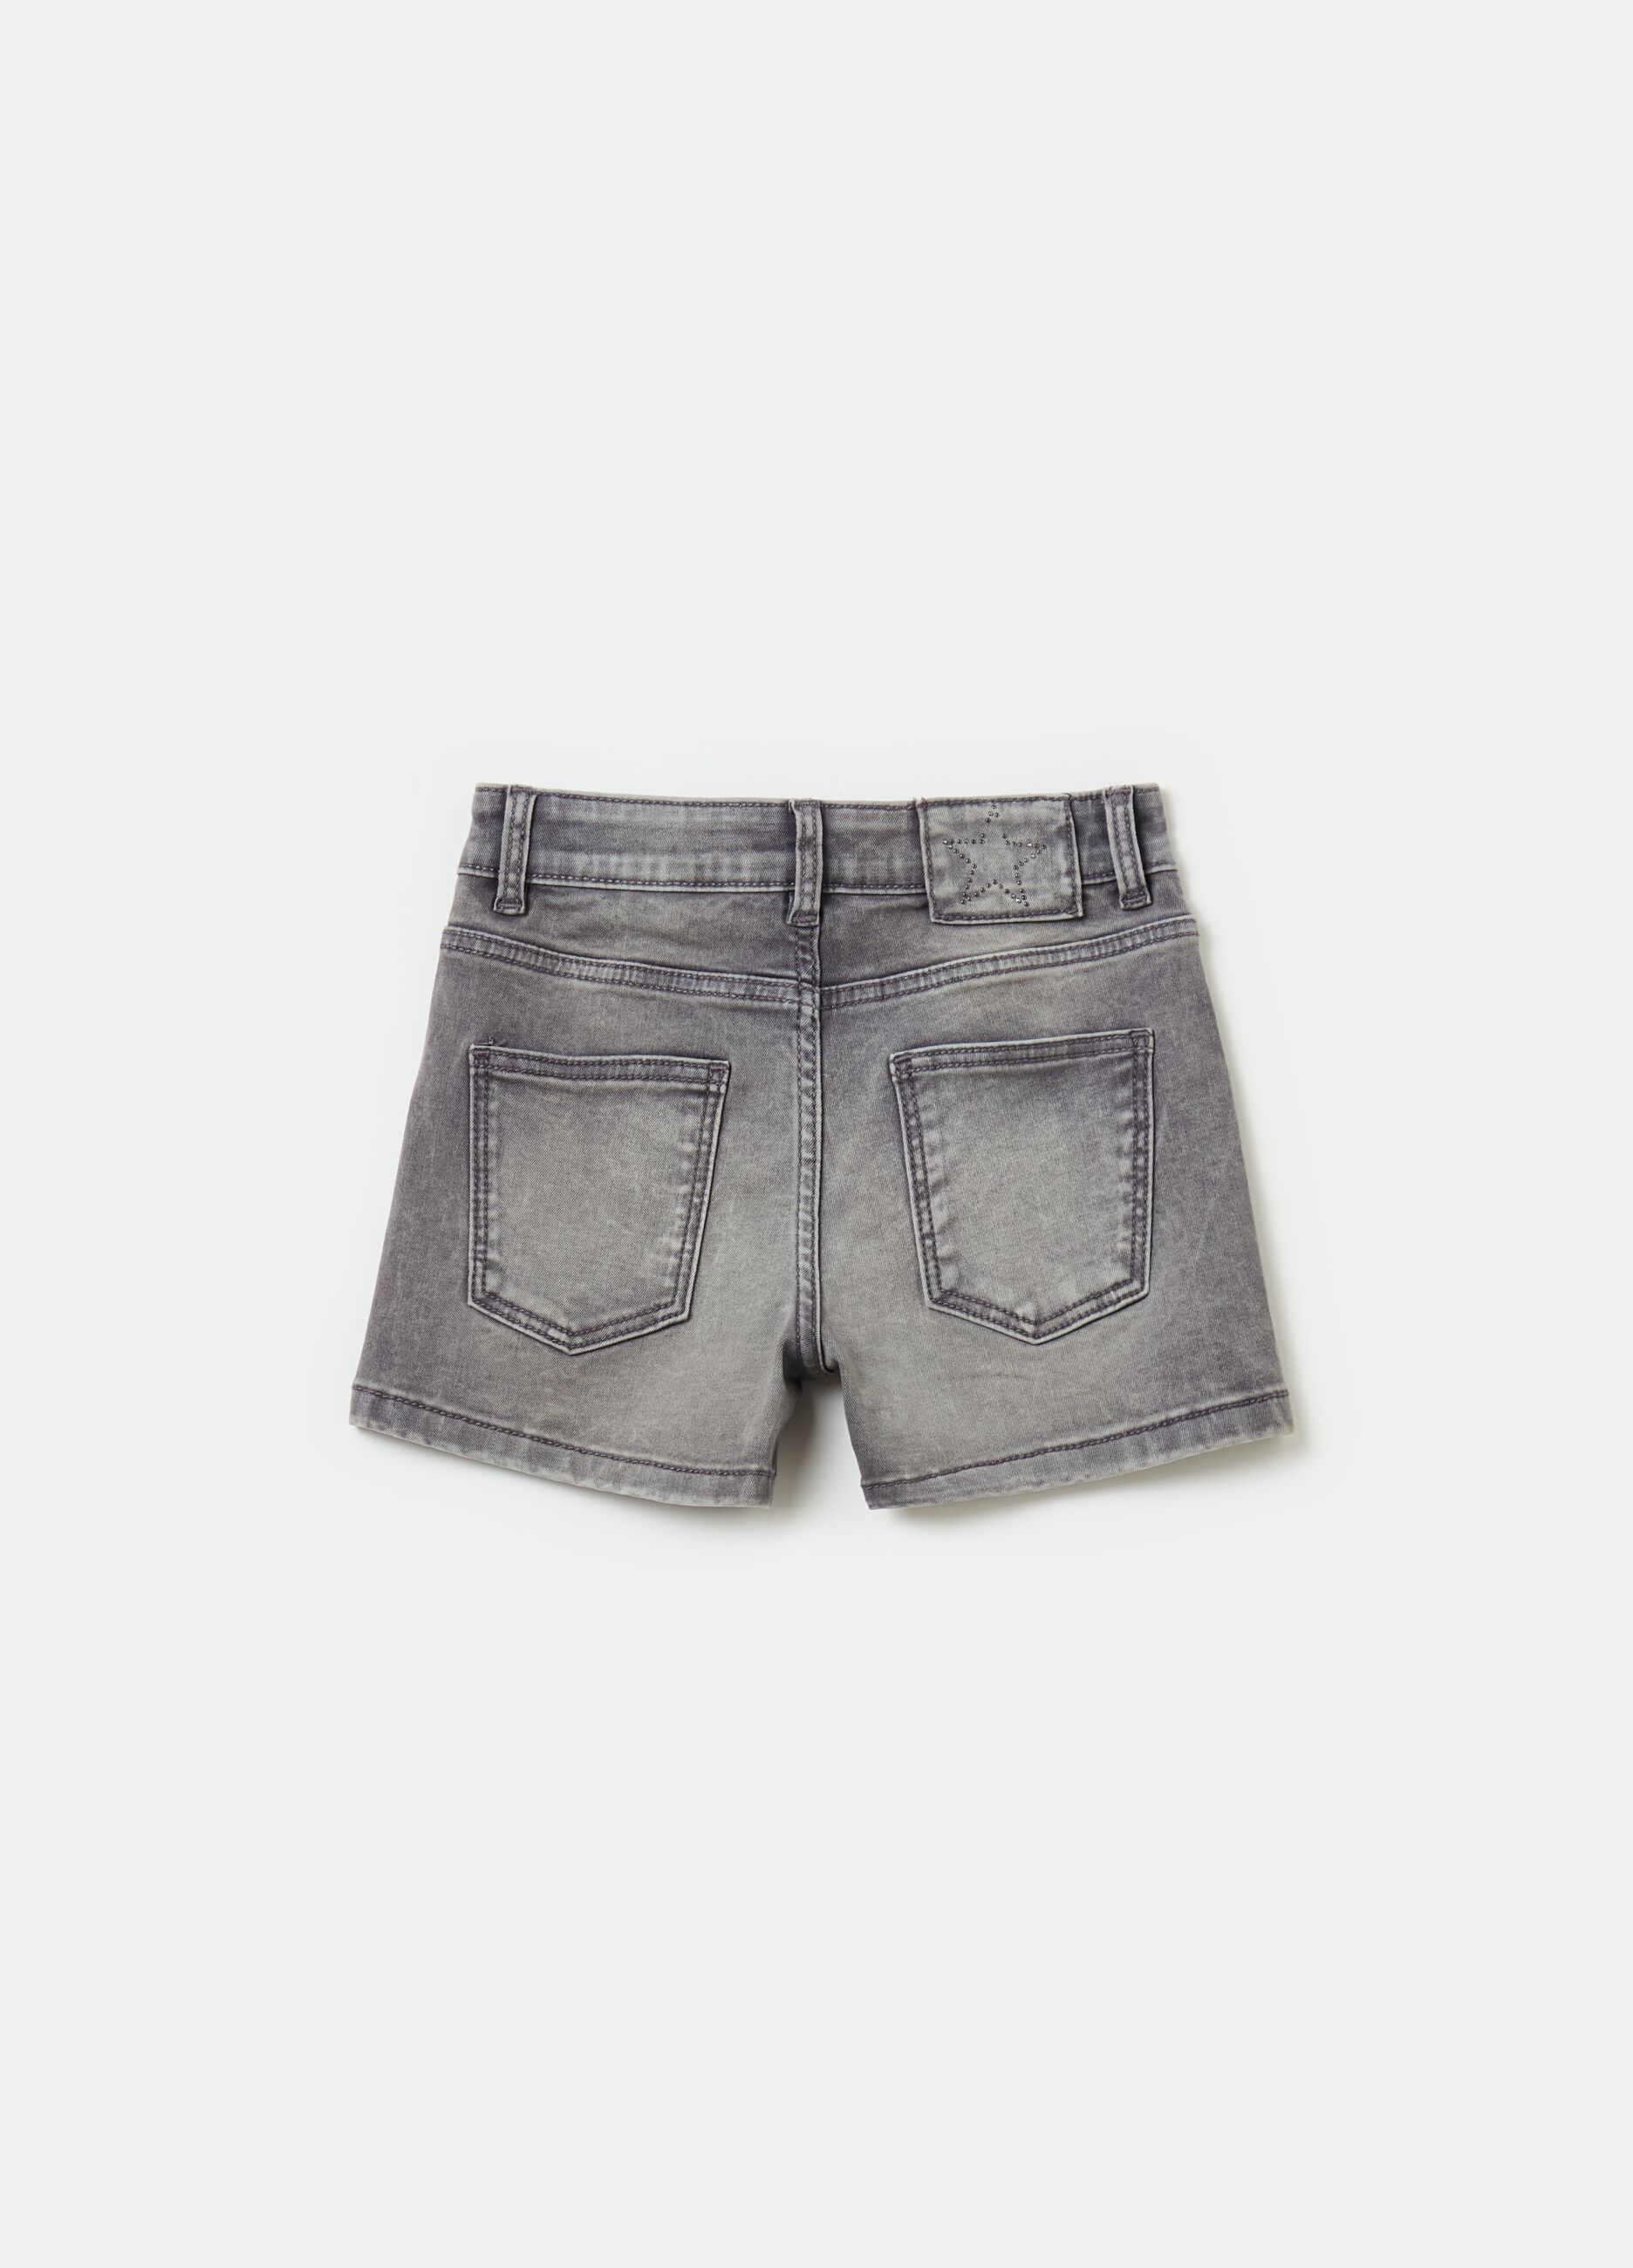 Denim shorts with diamantés and pockets